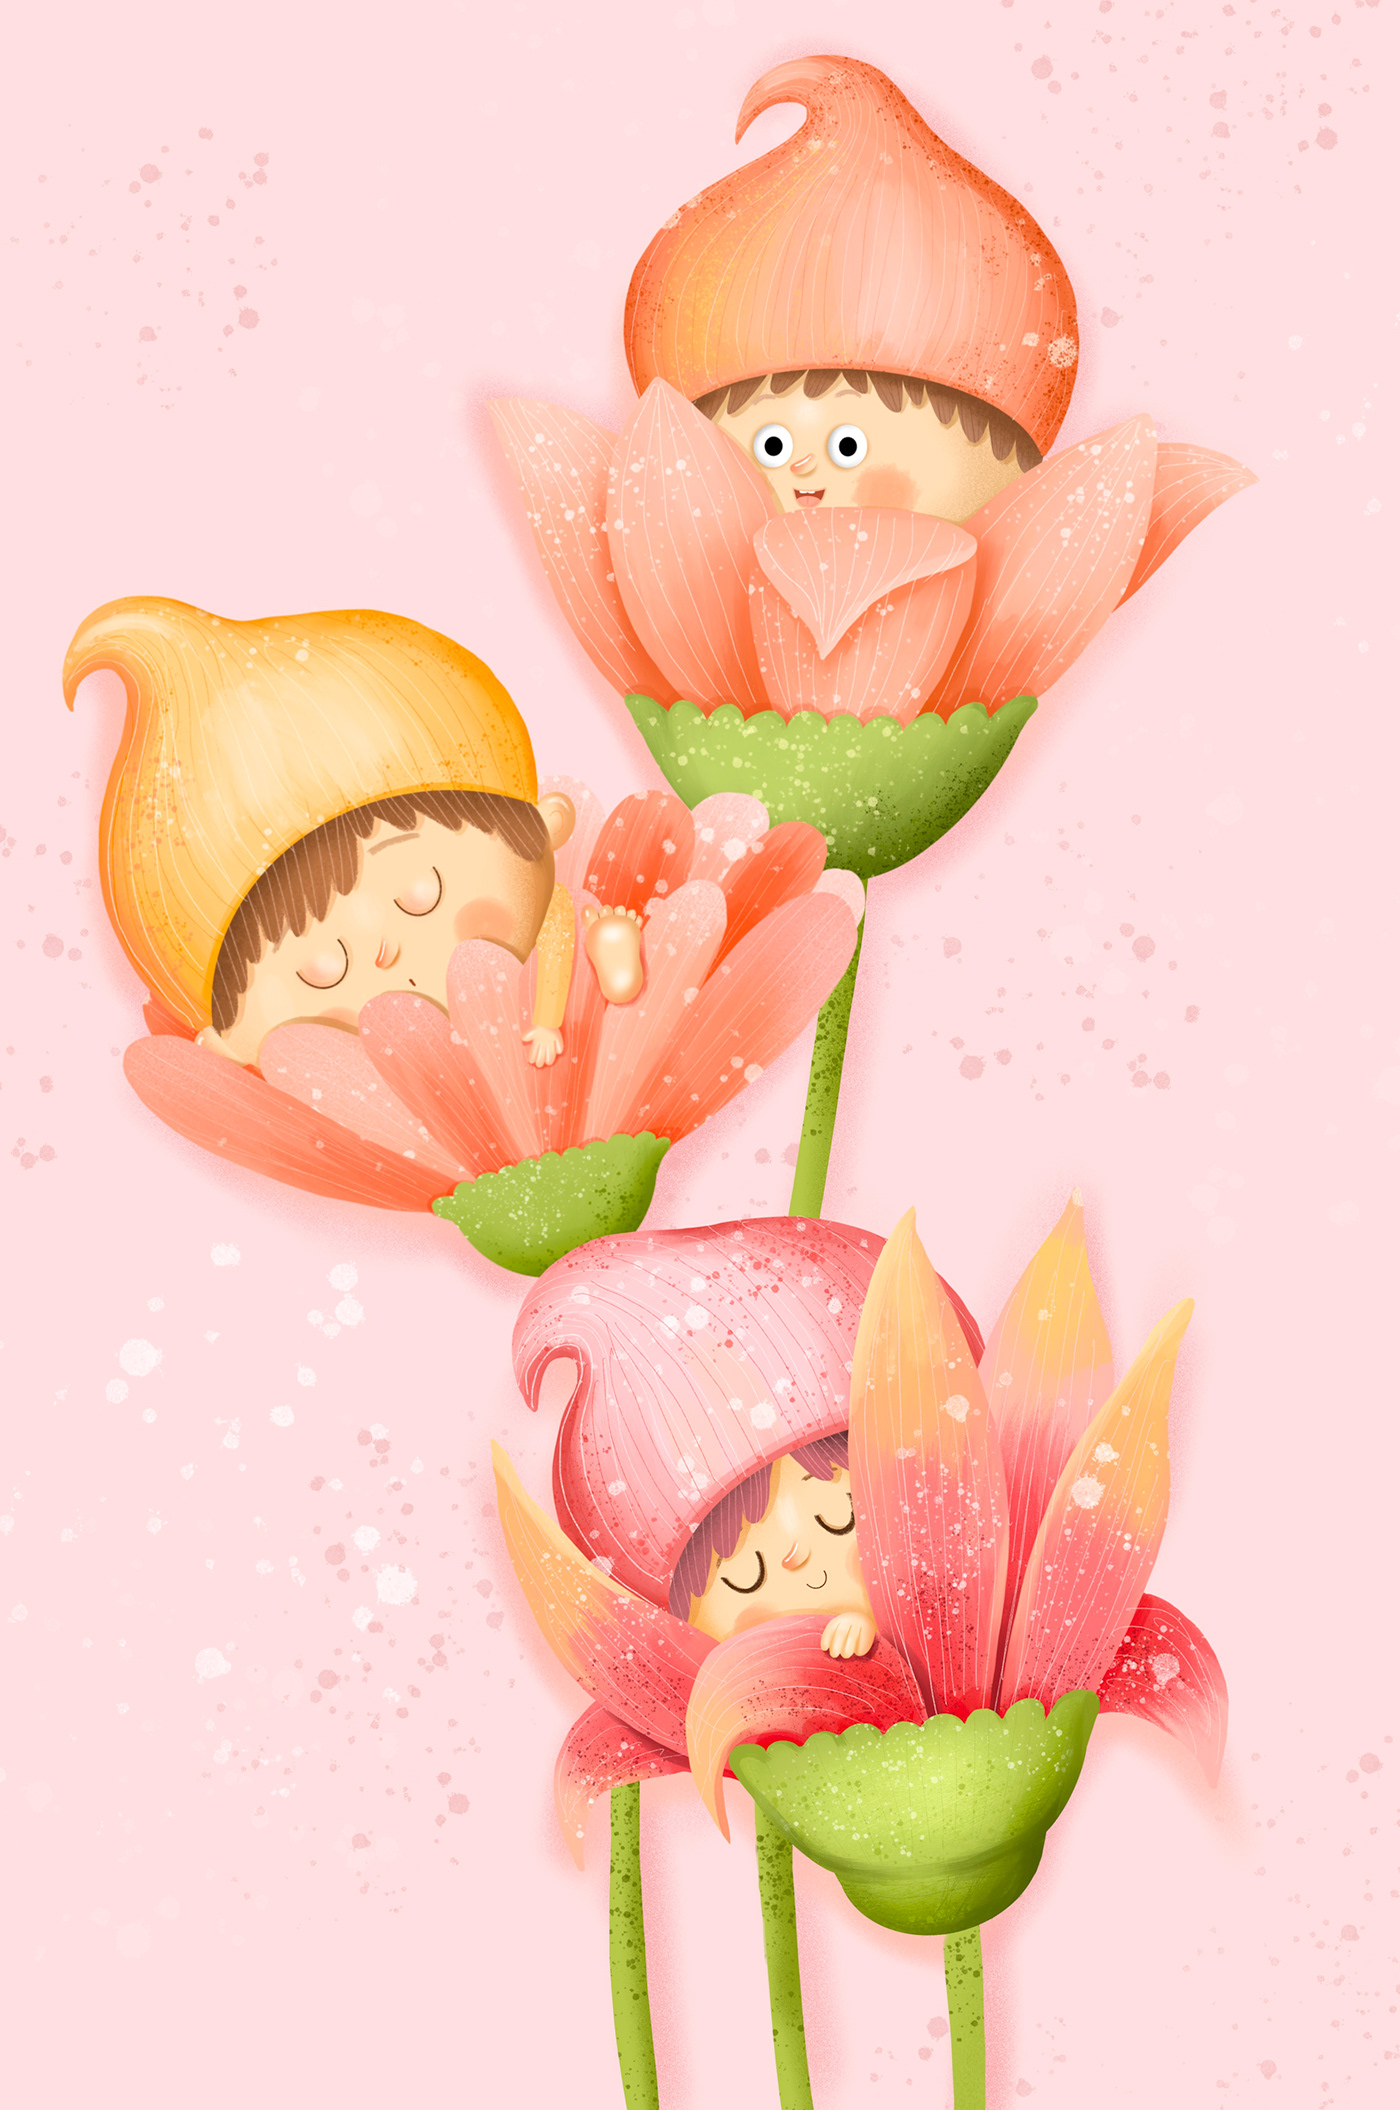 Character design  children children's book ChildrenIllustration cute Elfs fairytale Flowers kids pink